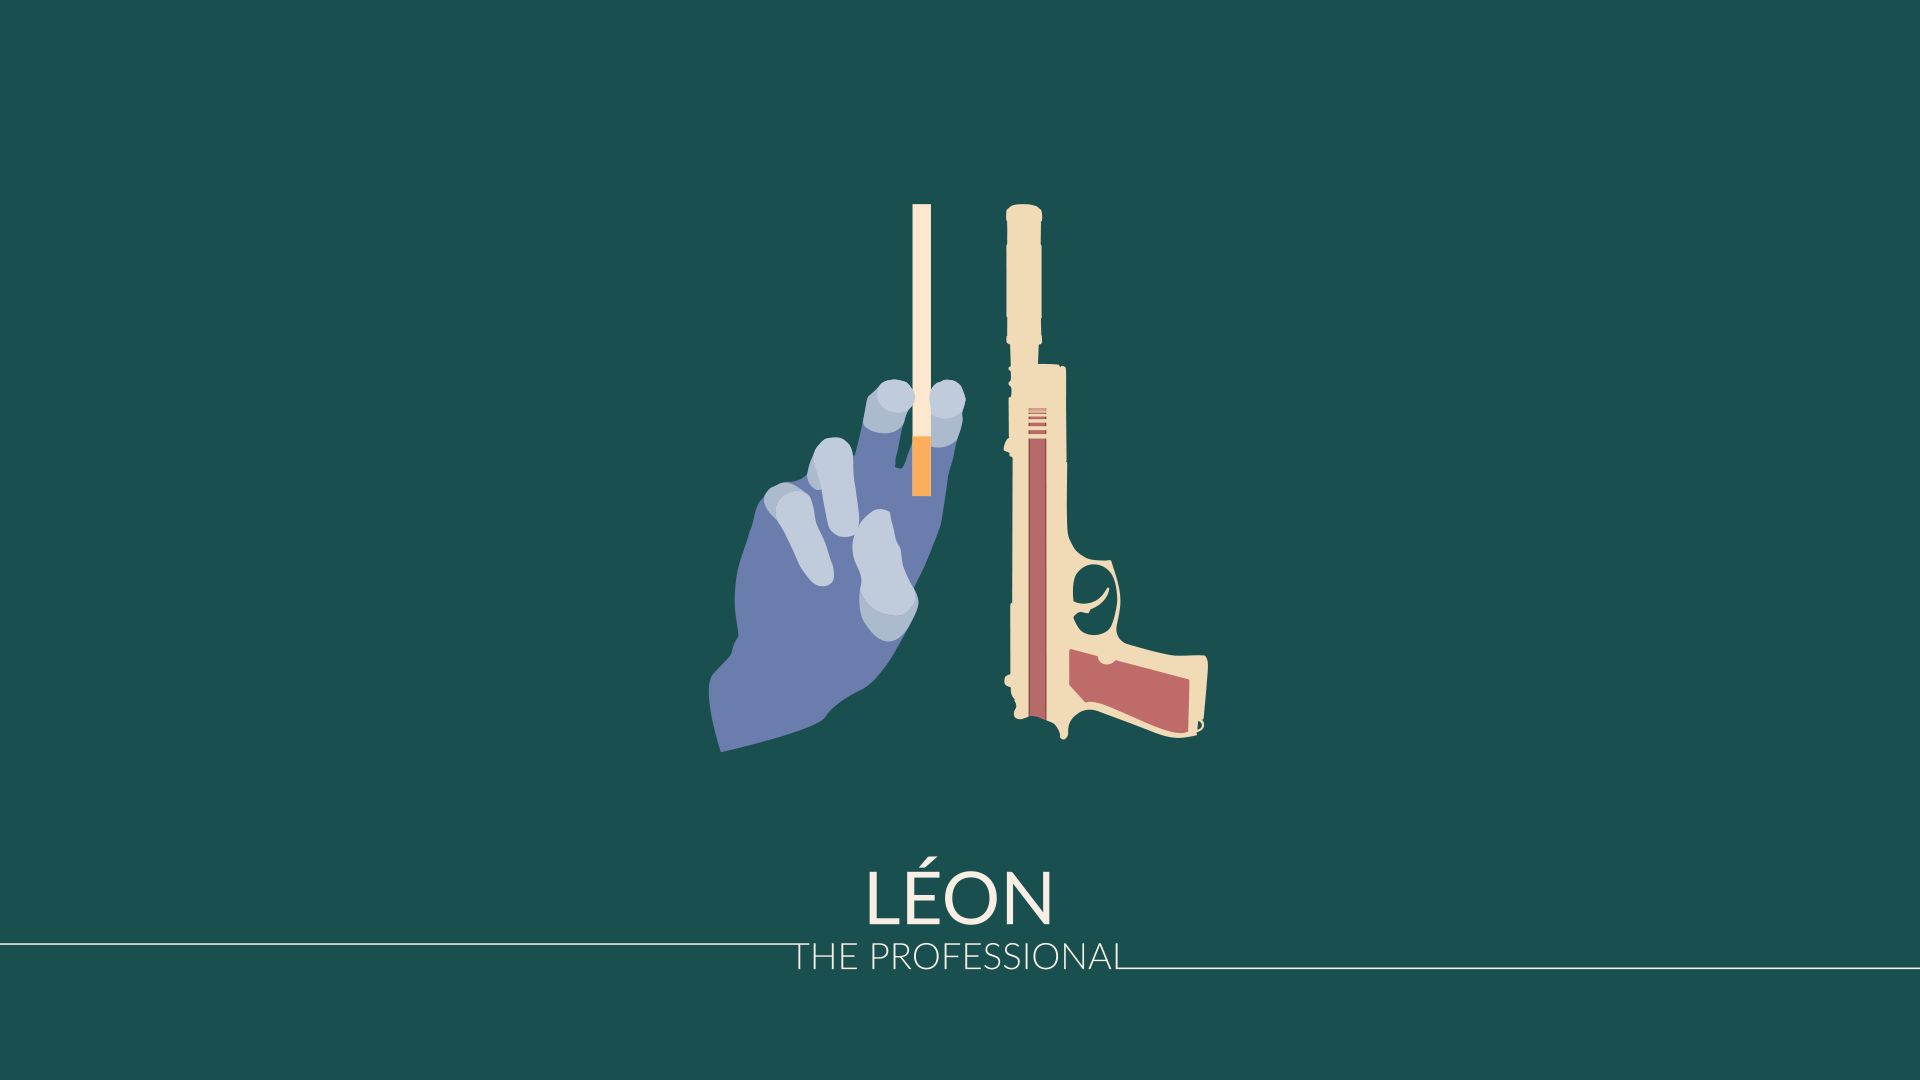 leon: the professional, movie, minimalist